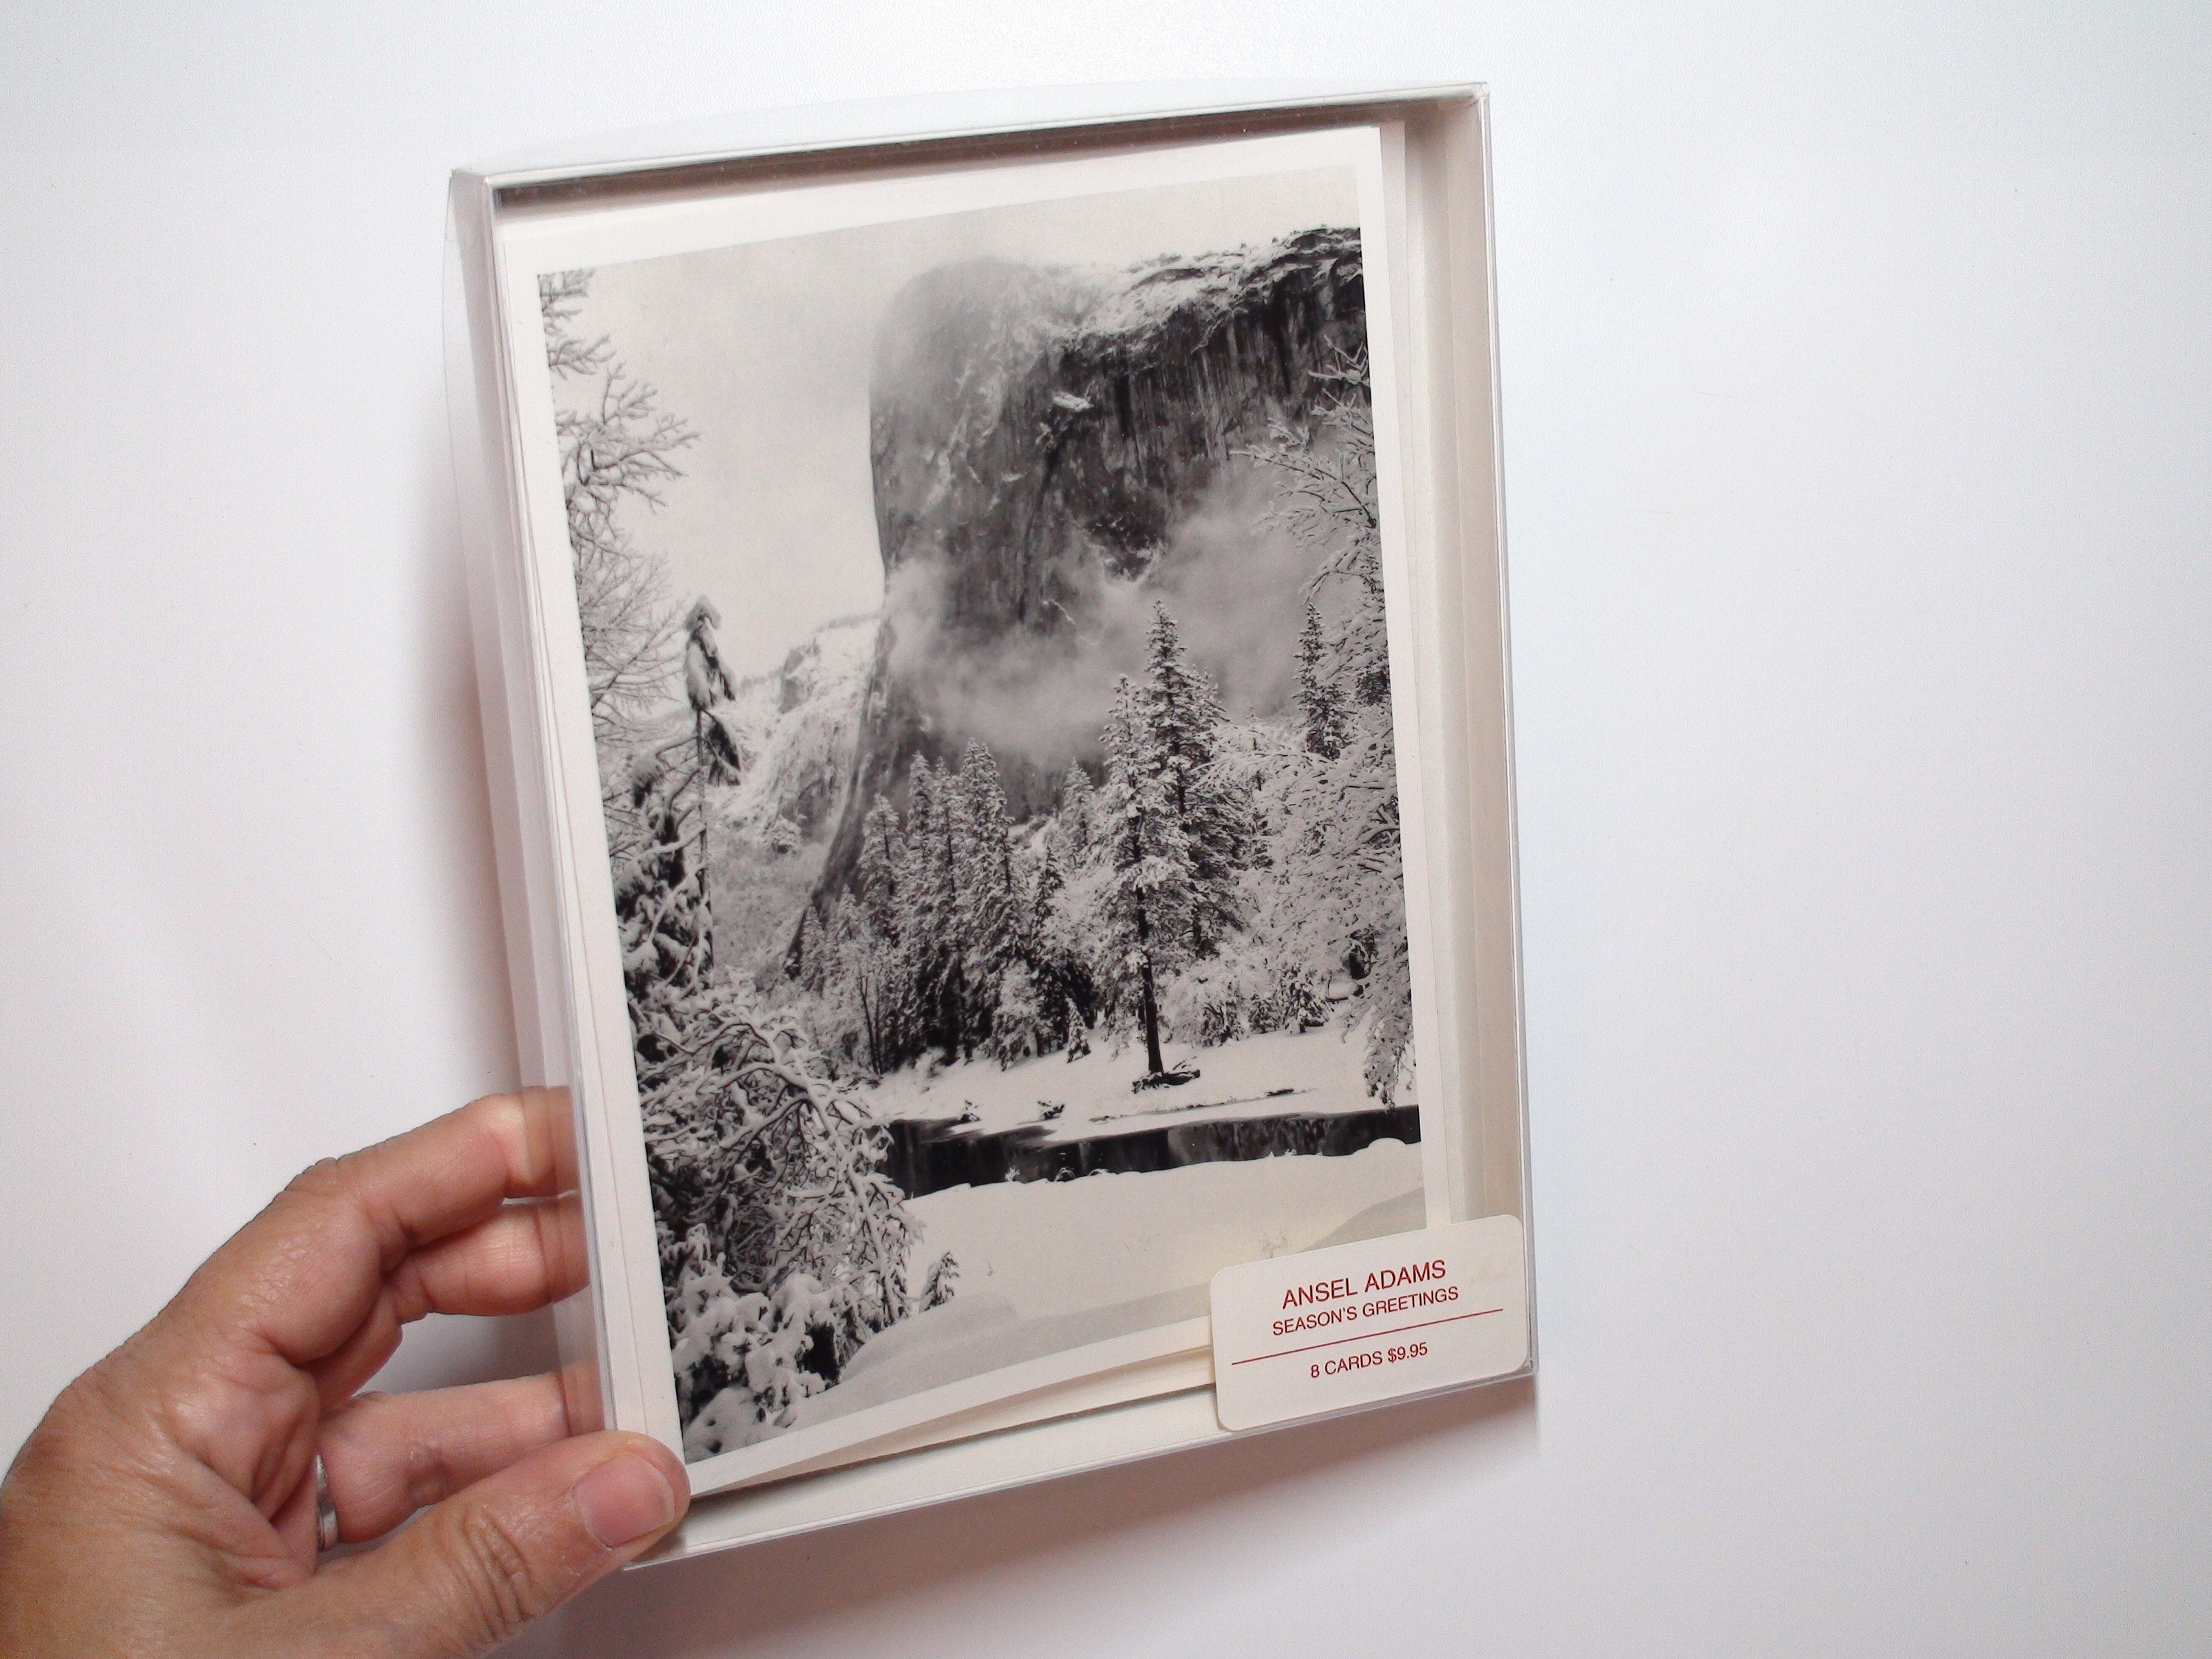 Yosemite, El Capitan, 8 Vintage Ansel Adams Holiday Greeting Cards Packaged in Original Box, With Envelopes, c1980s